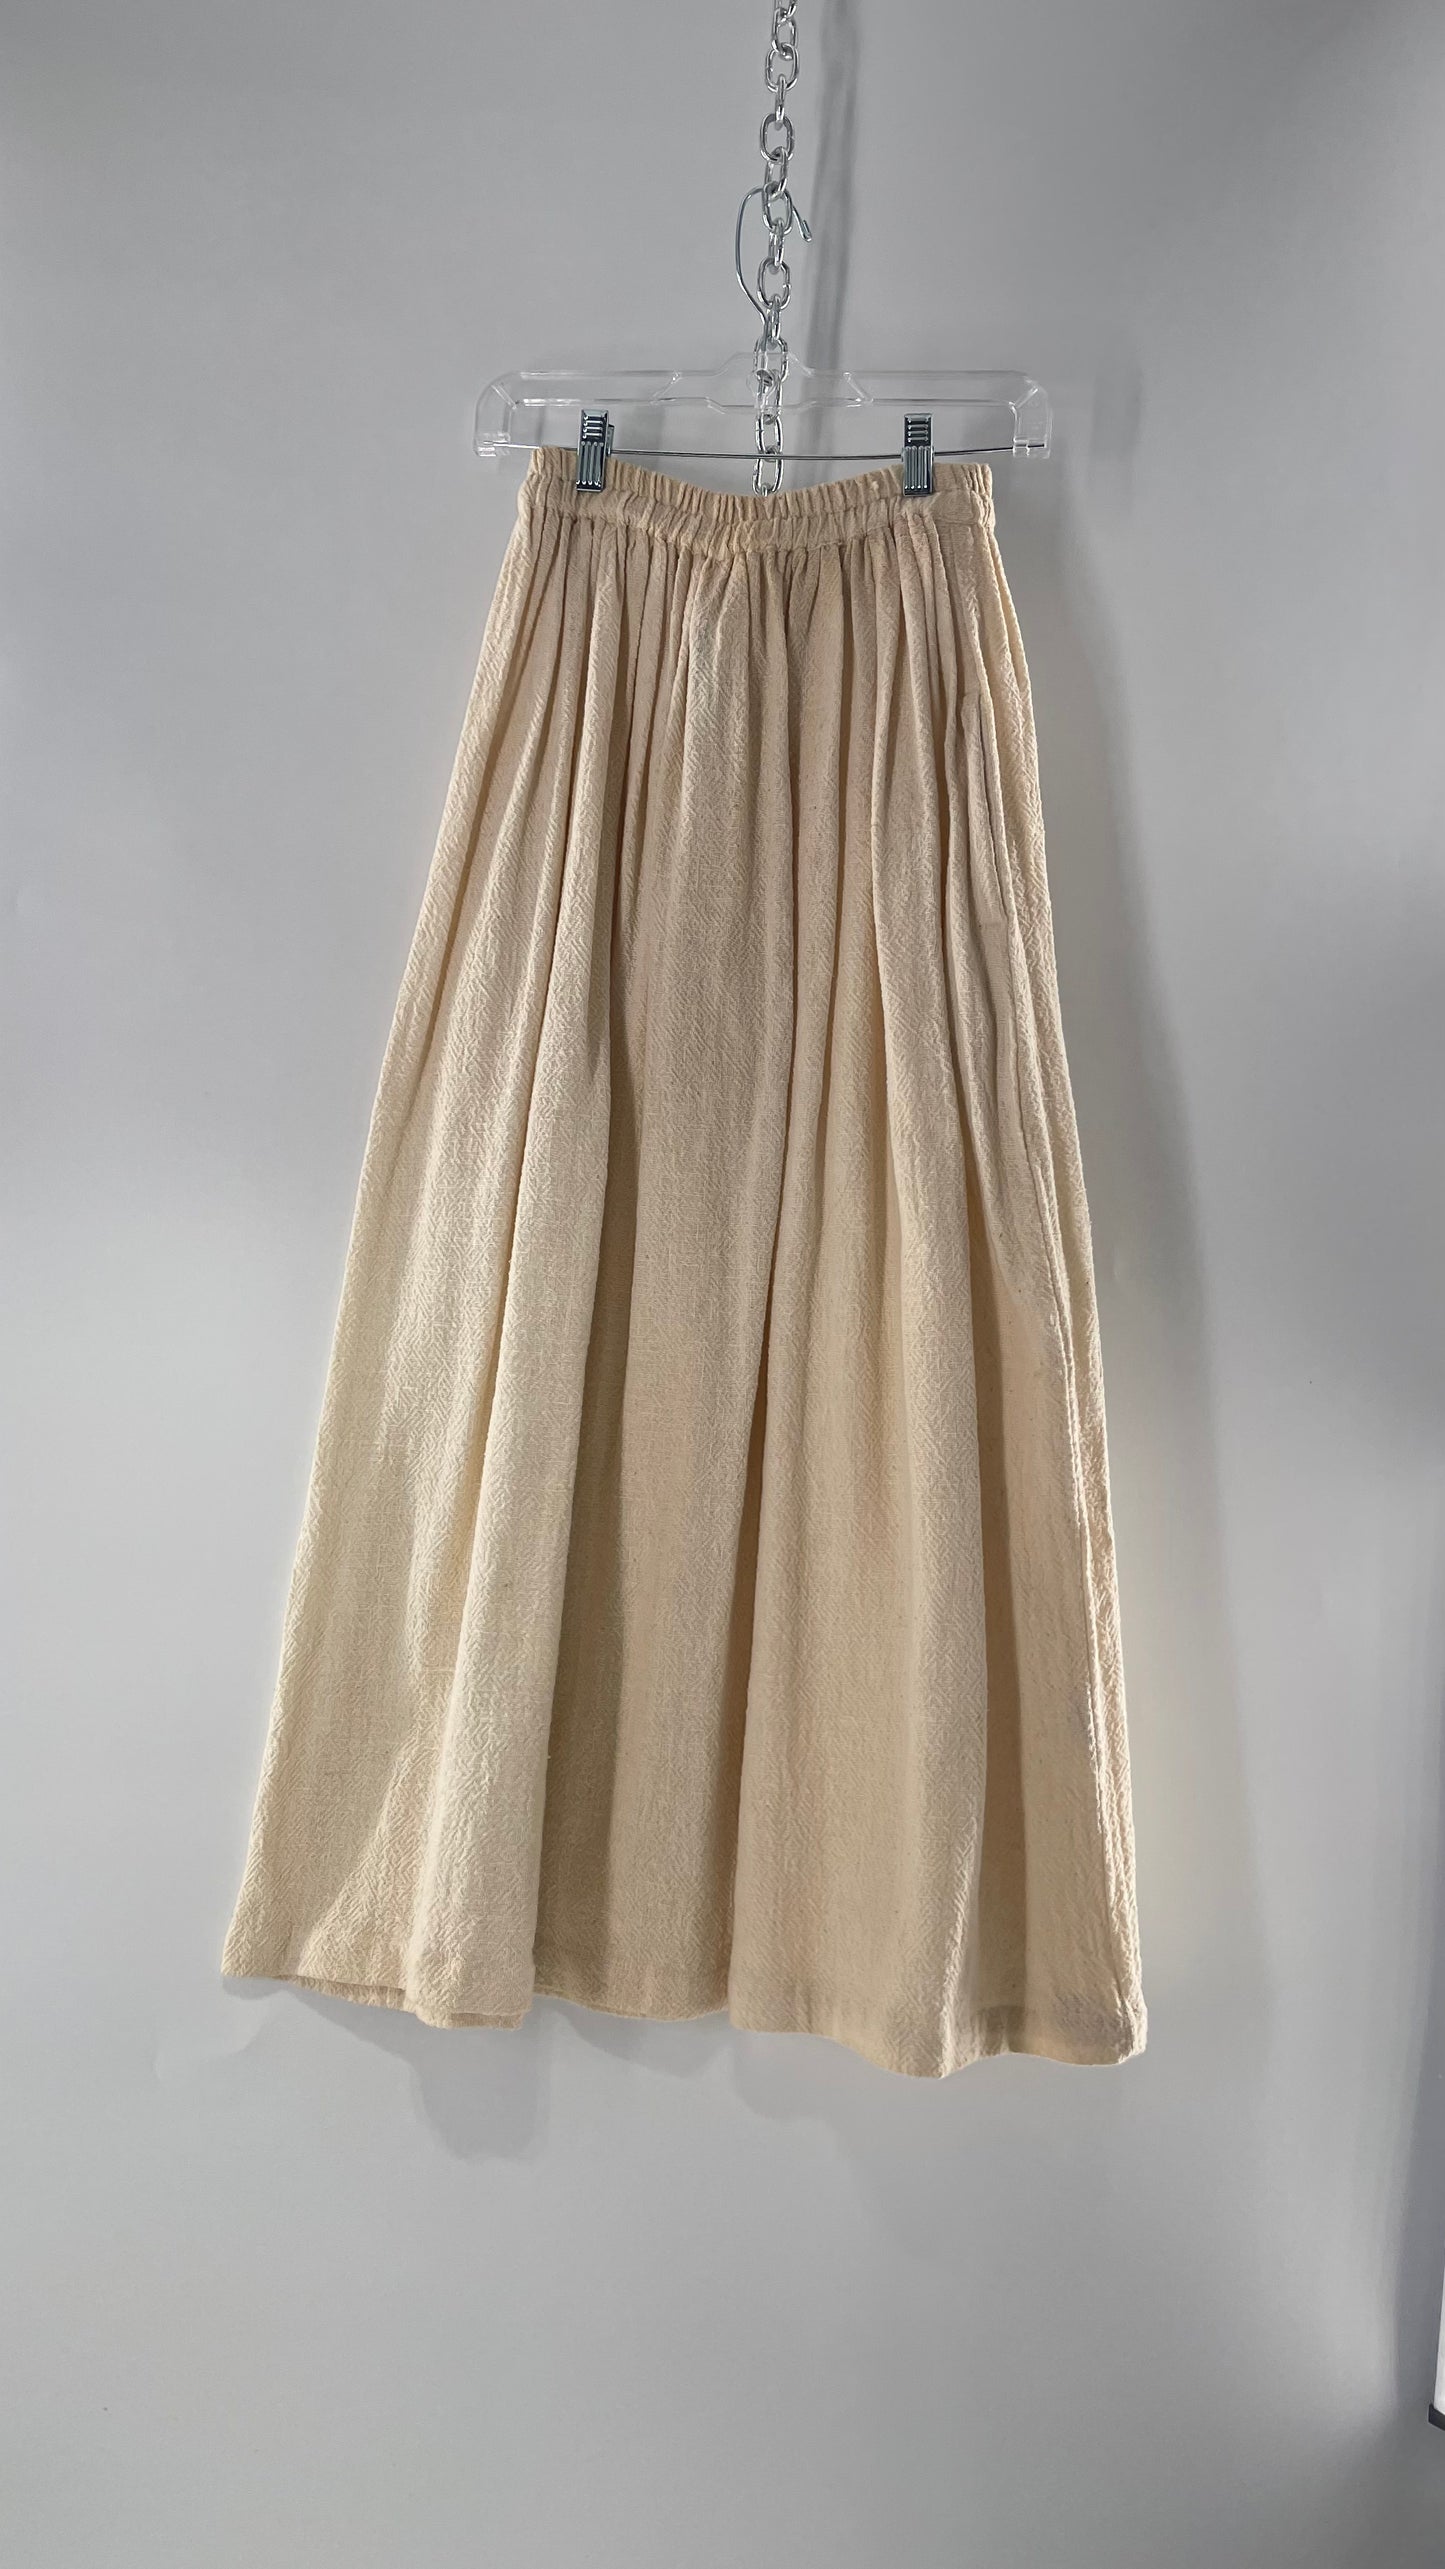 Vintage 1970s SANGAM Imports 100% Cotton White Maxi Skirt Made in India (Medium)